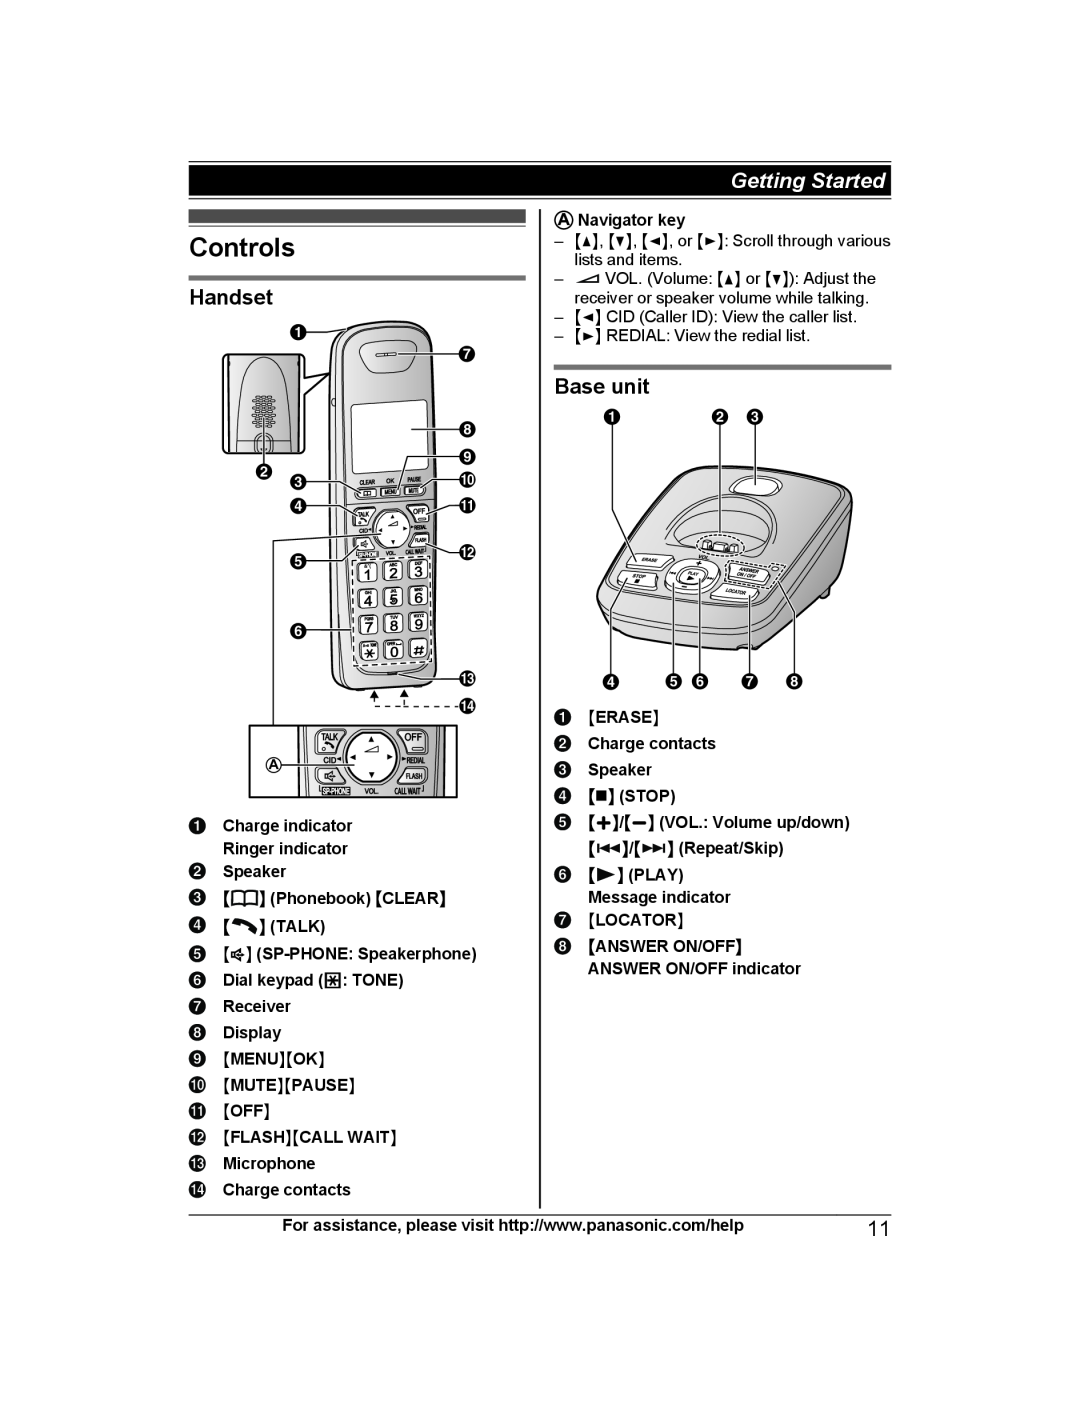 Panasonic KX-TG4225 Controls, Handset, Base unit, Getting Started, receiver or speaker volume while talking, E F G H 